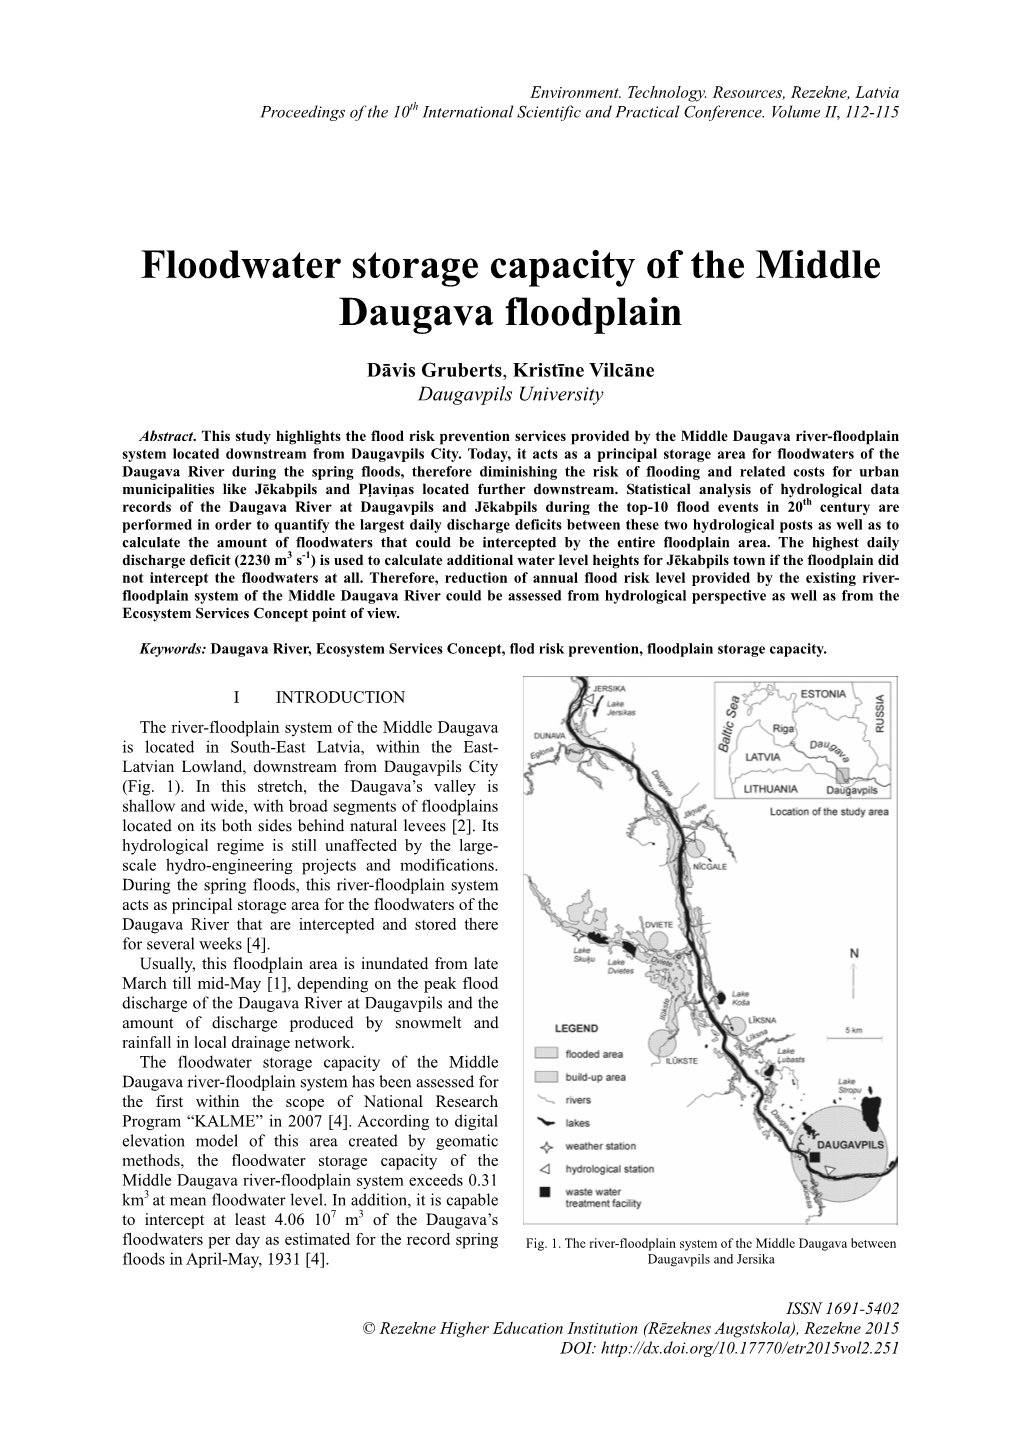 Floodwater Storage Capacity of the Middle Daugava Floodplain